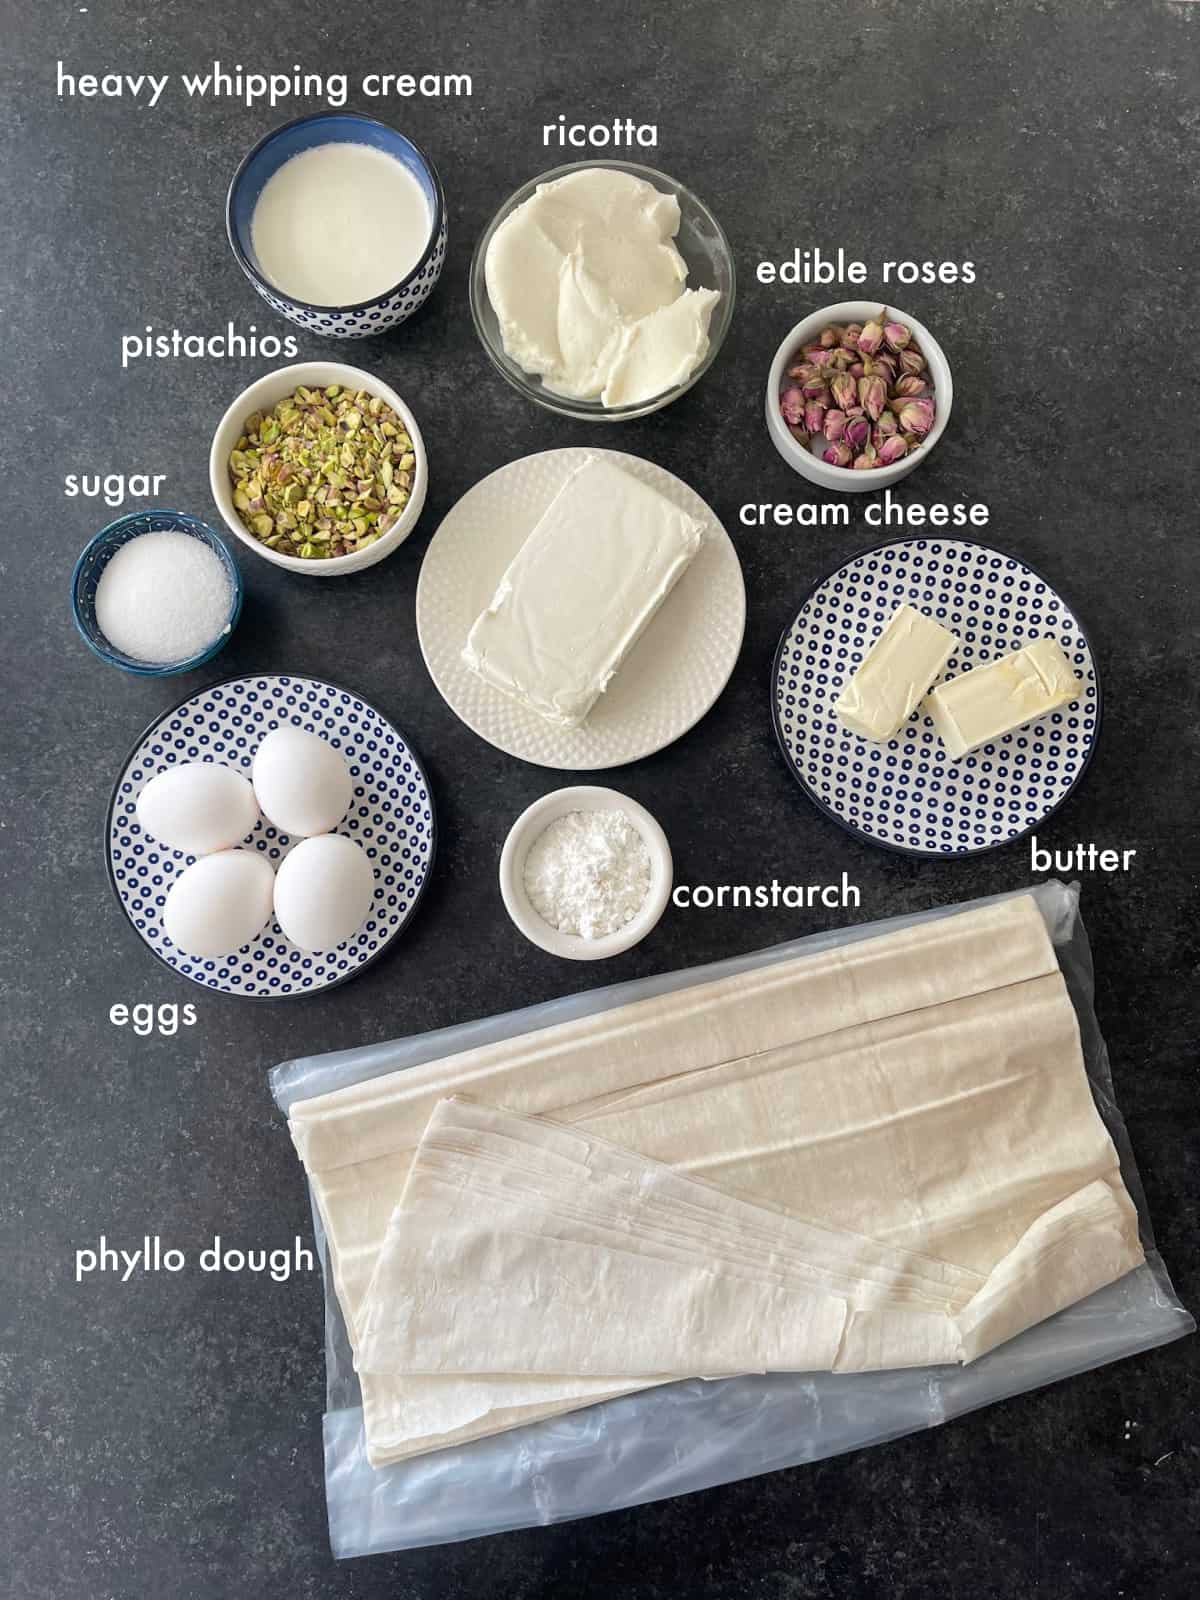 To make this recipe you need phyllo dough, cream cheese, ricotta, butter, heavy cream, pistachios, eggs, cornstarch and sugar.